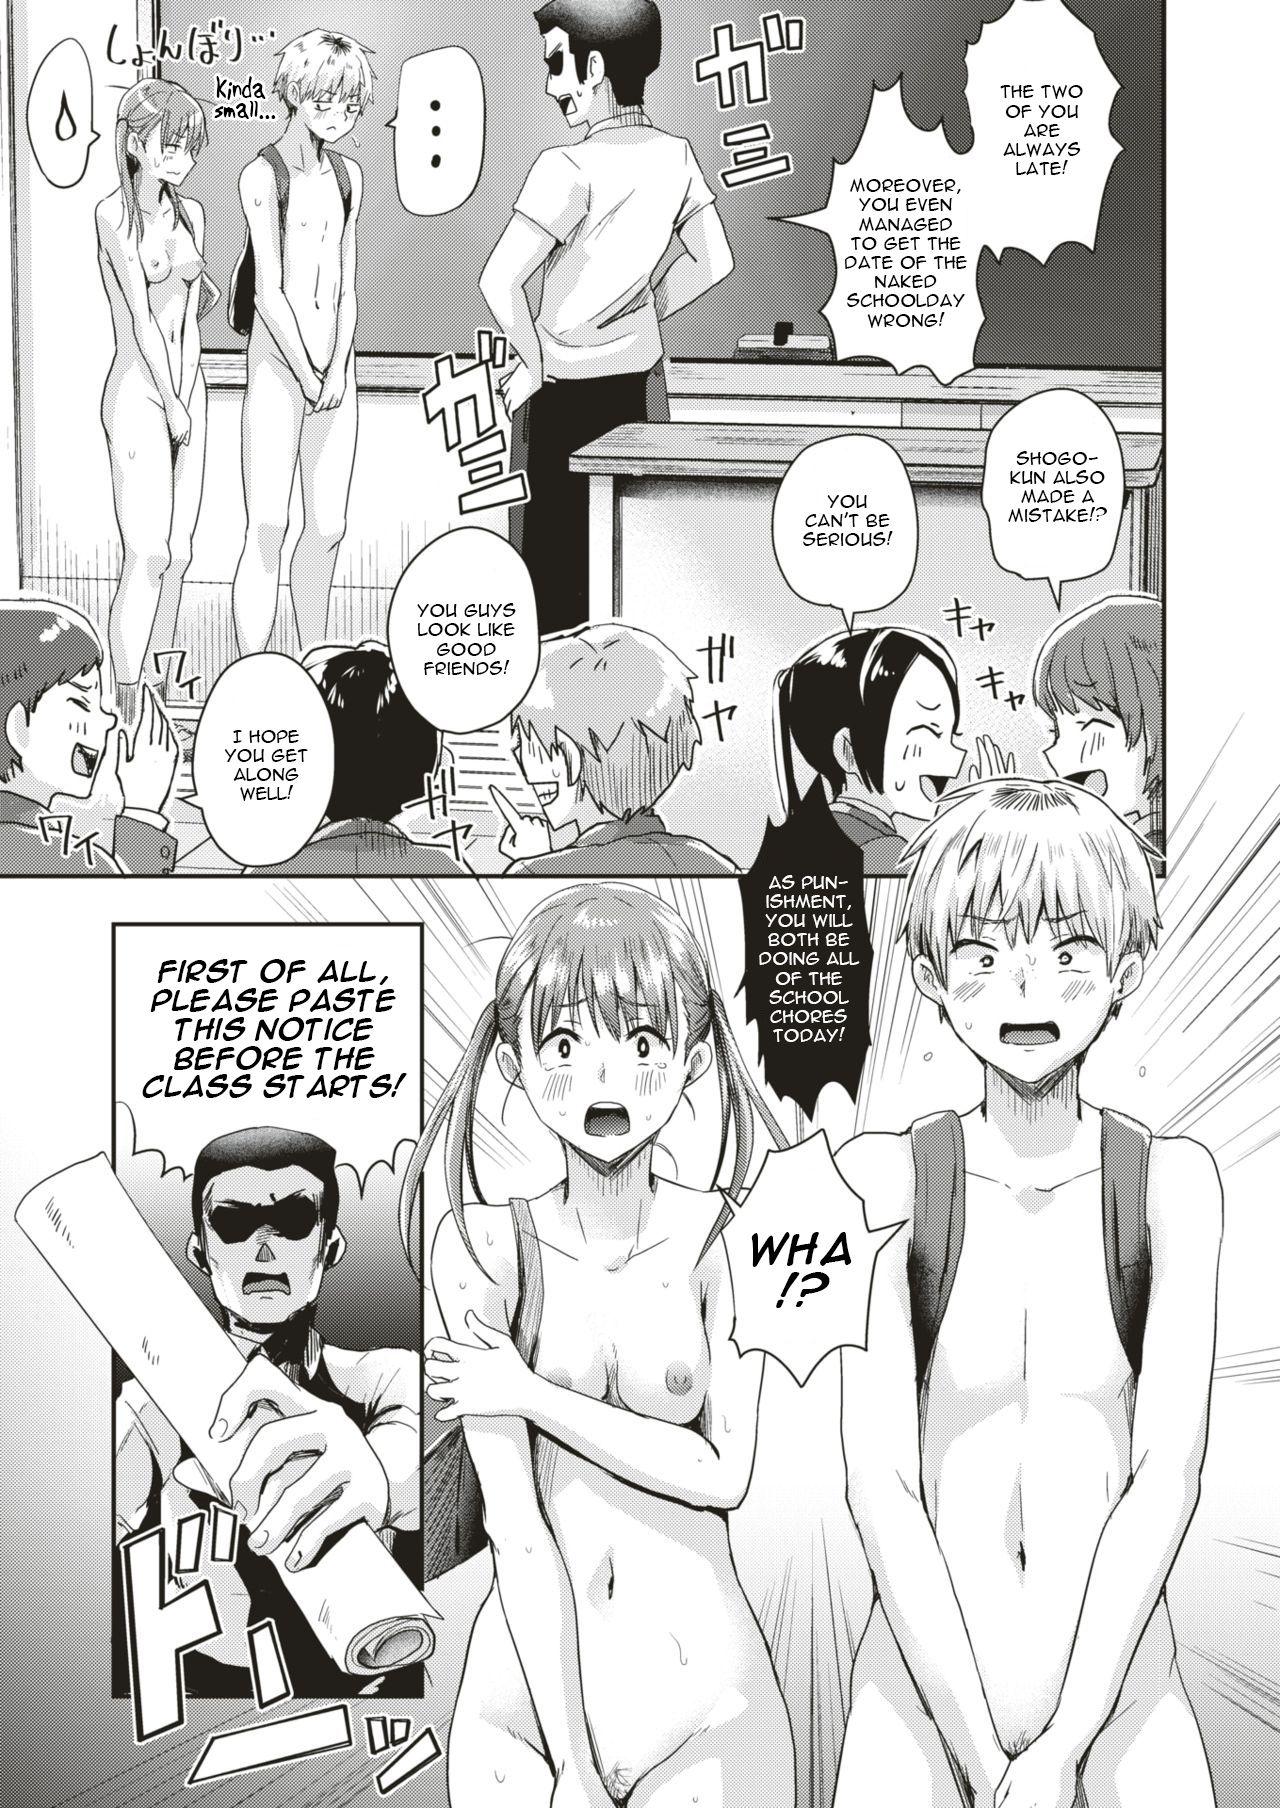 Muscles Honjitsu wa Zenra Toukoubi!? | Today is a Naked Schoolday!? Office - Page 8